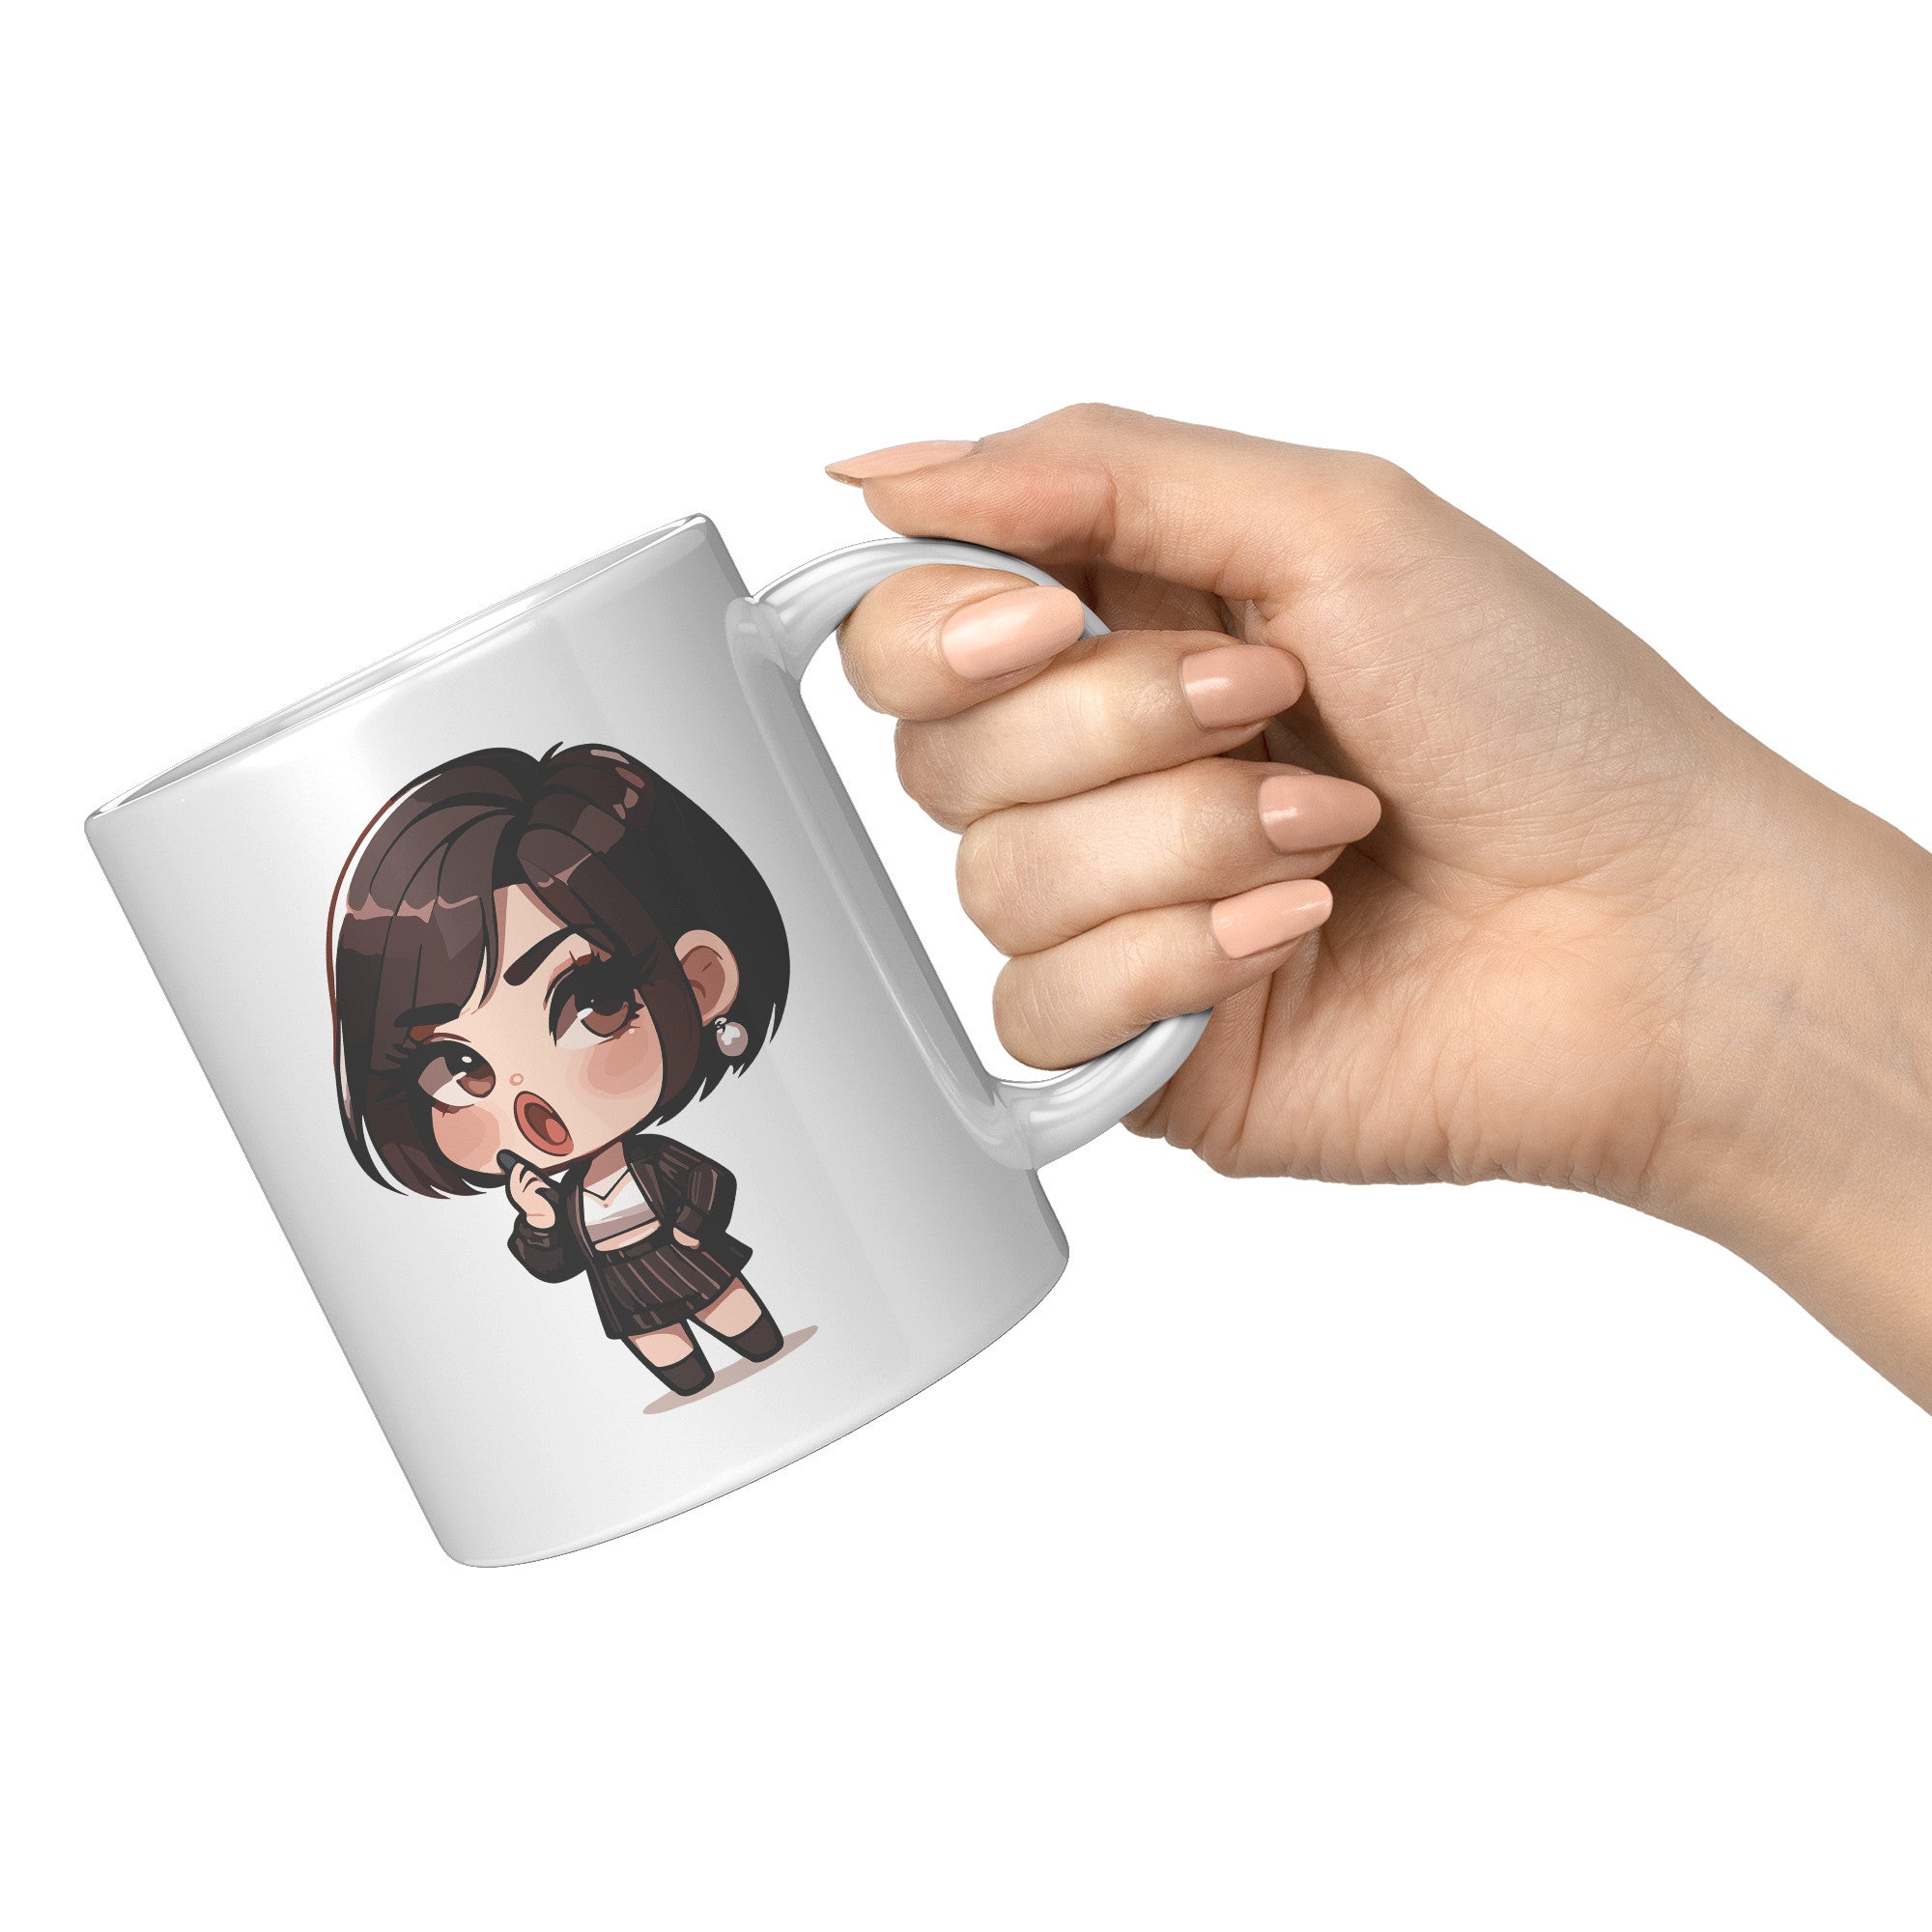 "Marites Gossip Queen Coffee Mug - Cute Cartoon 'Ano Ang Latest?' Cup - Perfect Chismosa Gift - Filipino Slang Tea Mug" - VVV